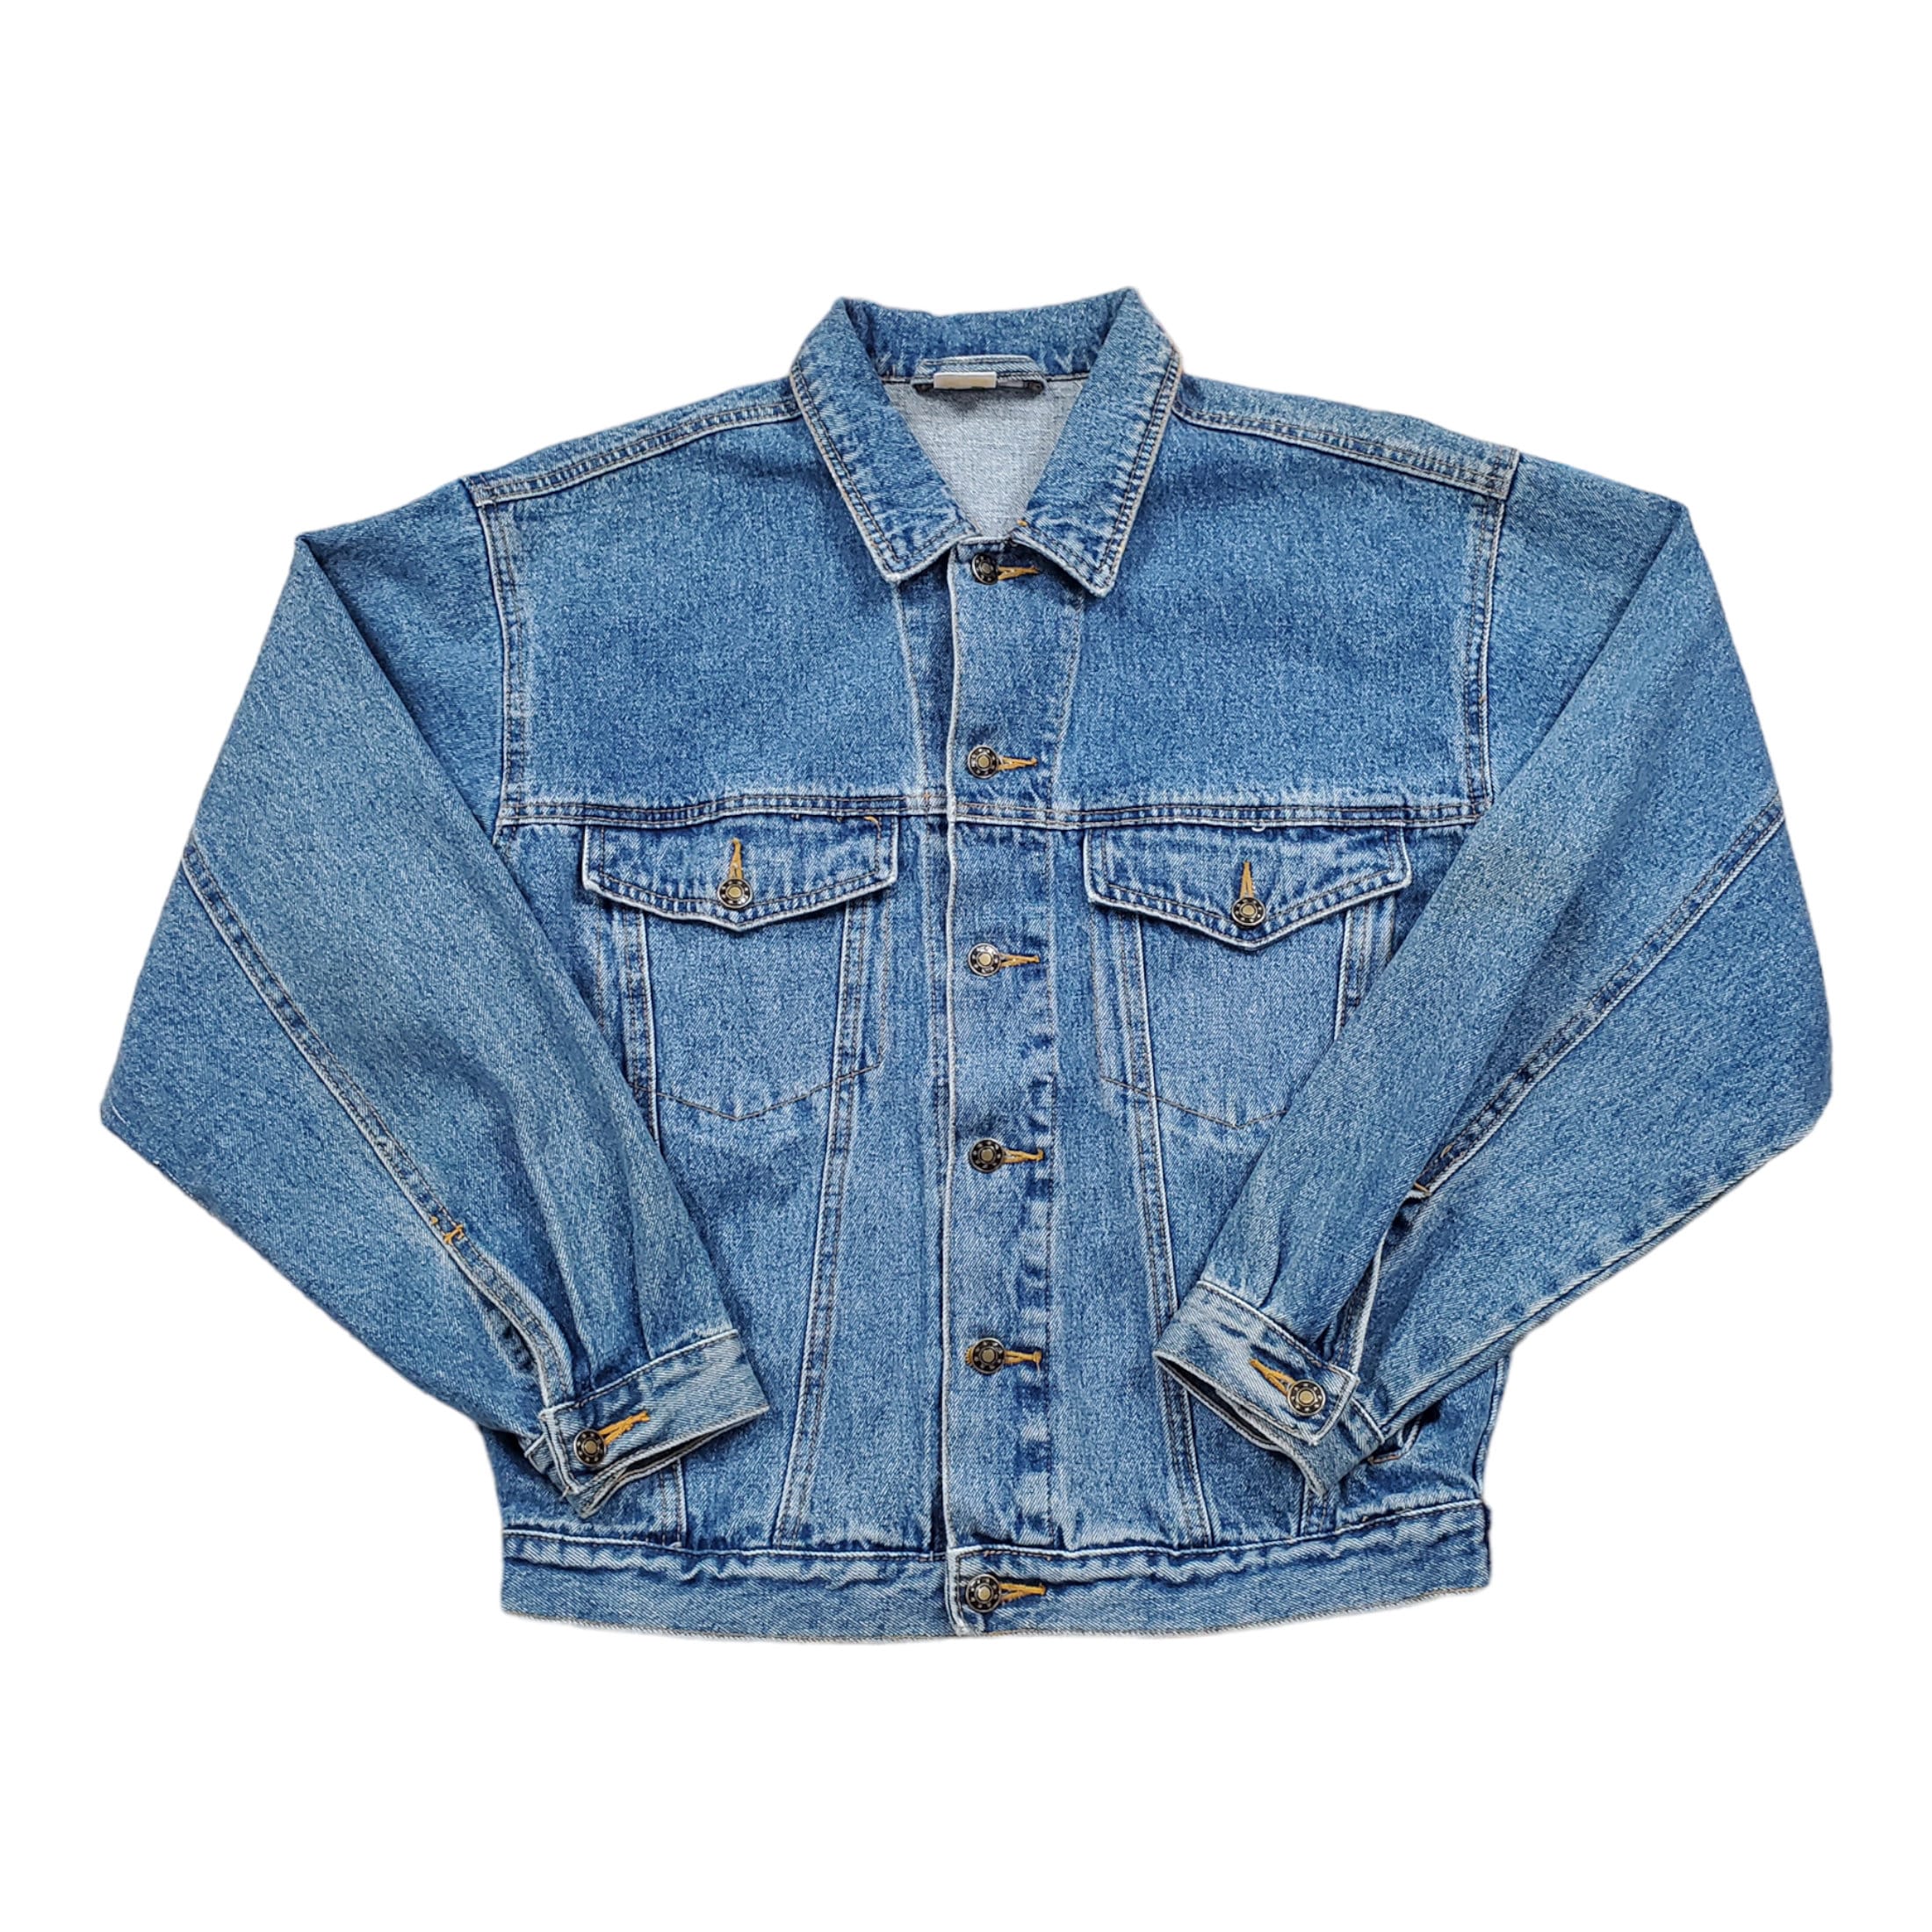 Denim/Workwear Jackets – People's Champ Vintage